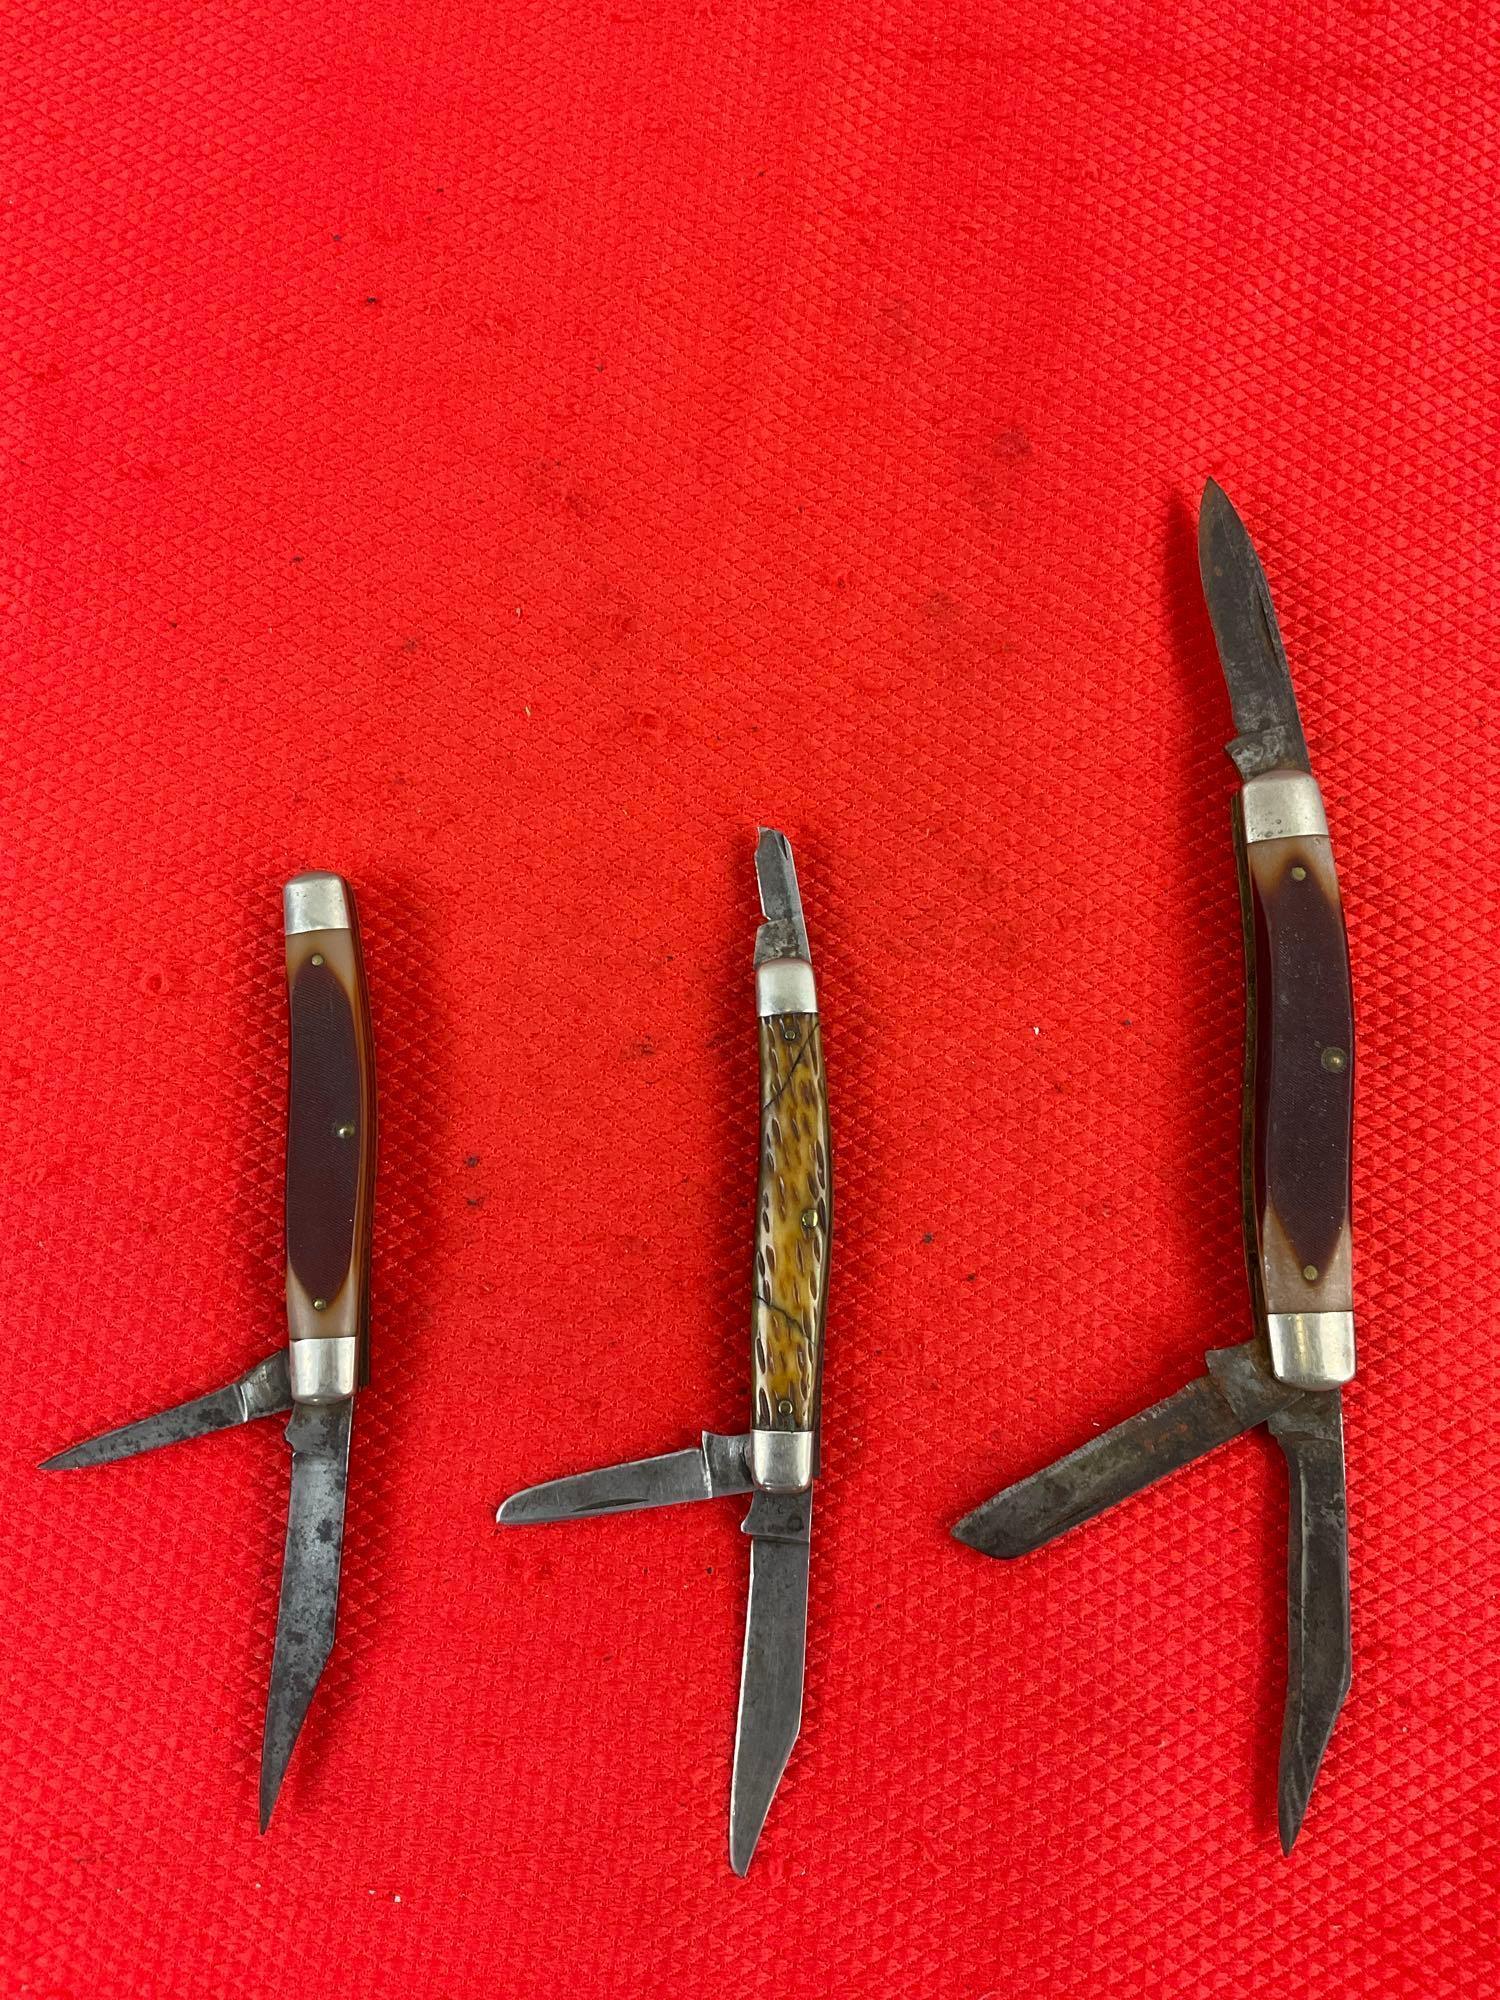 3 pcs Vintage Schrade Steel Folding Blade Pocket Knives Models 6OT, 33OT, 834. As Is. See pics.